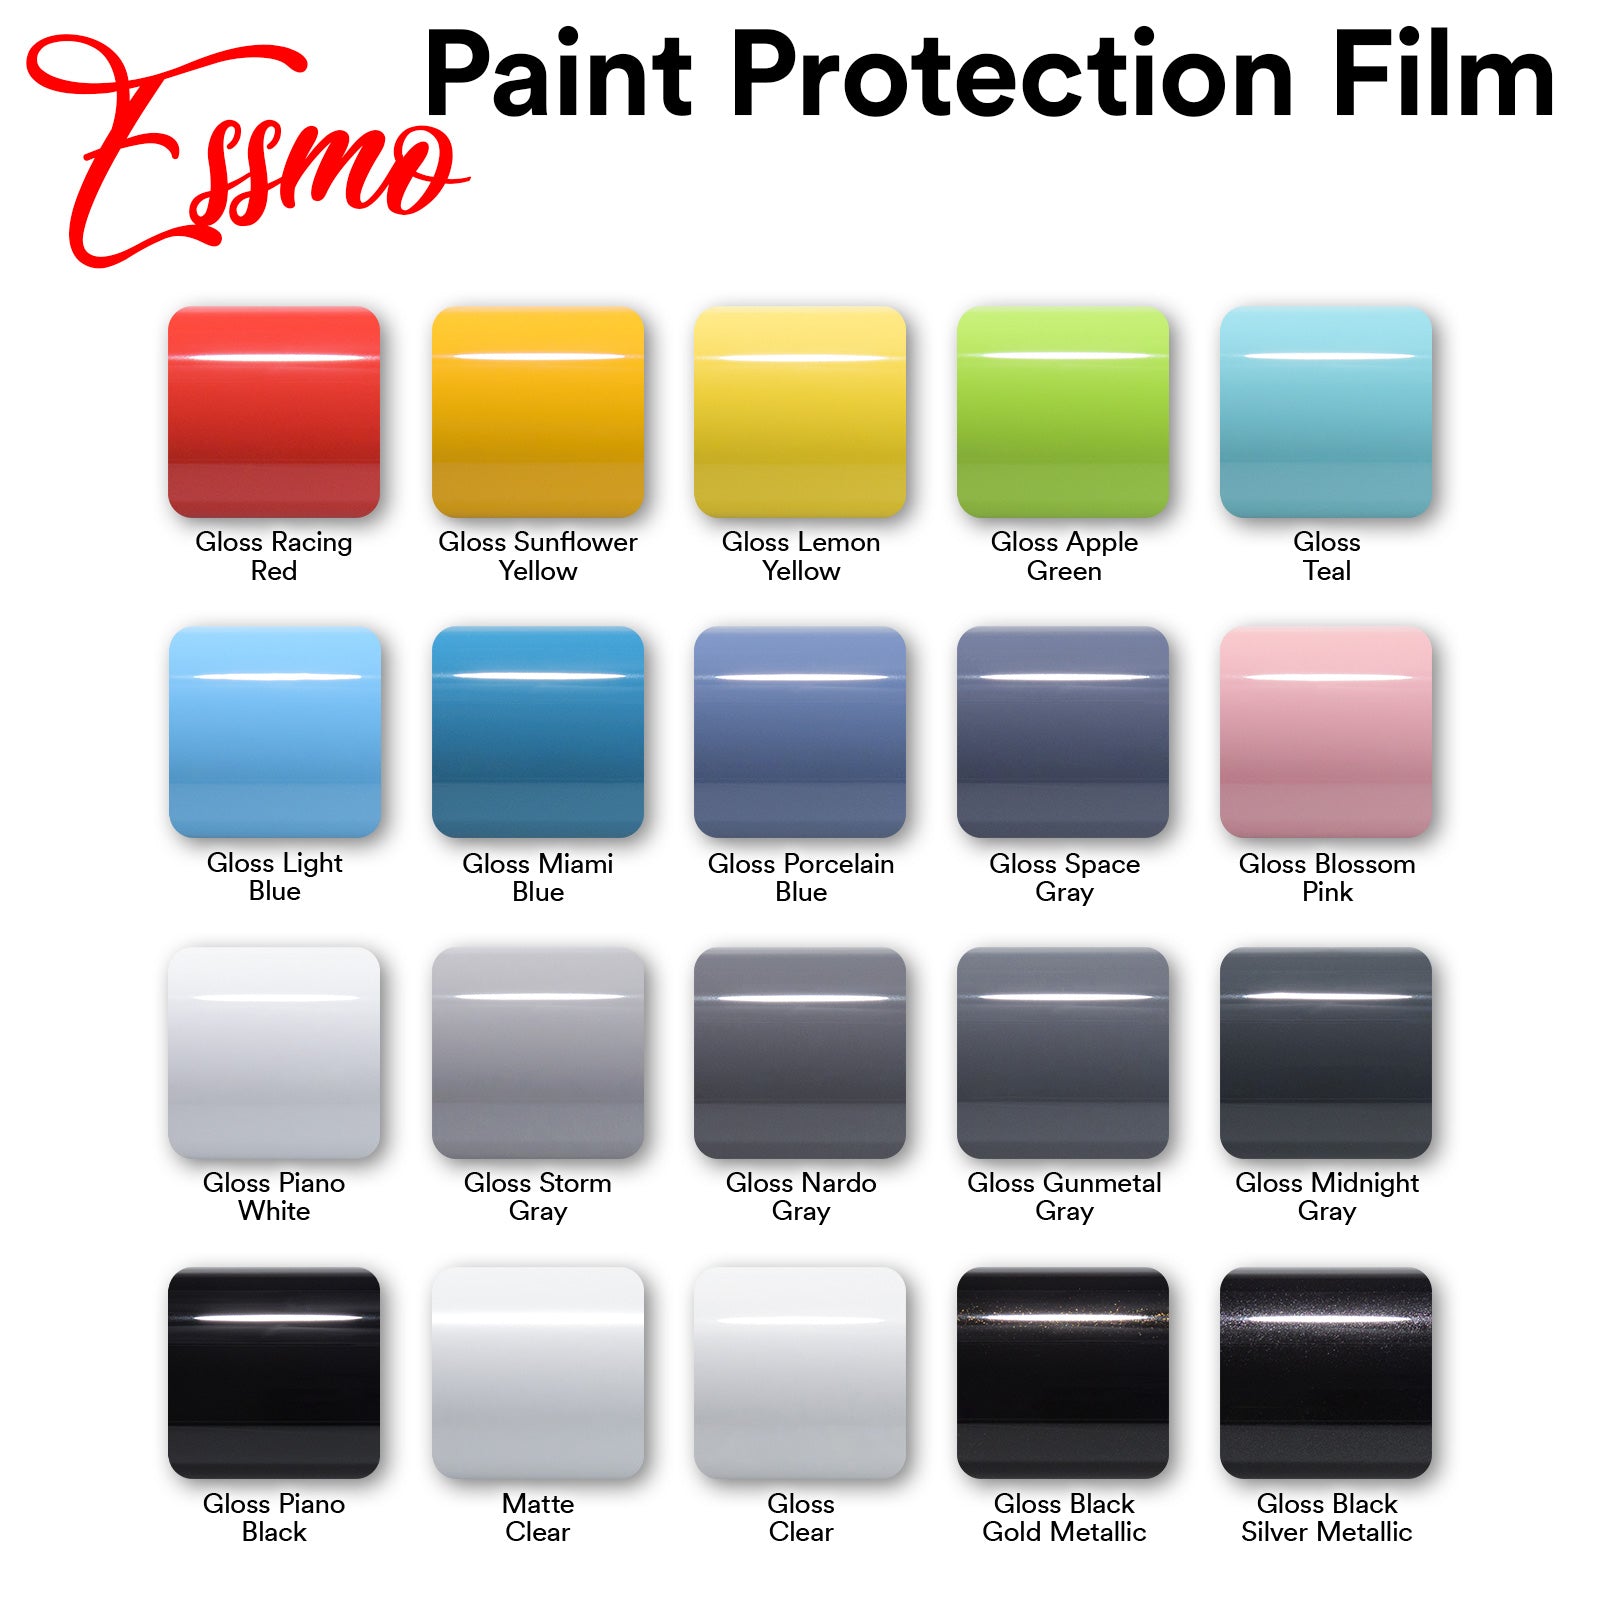 ESSMO Clear Paint Protection Film Matte – Essmovinyl